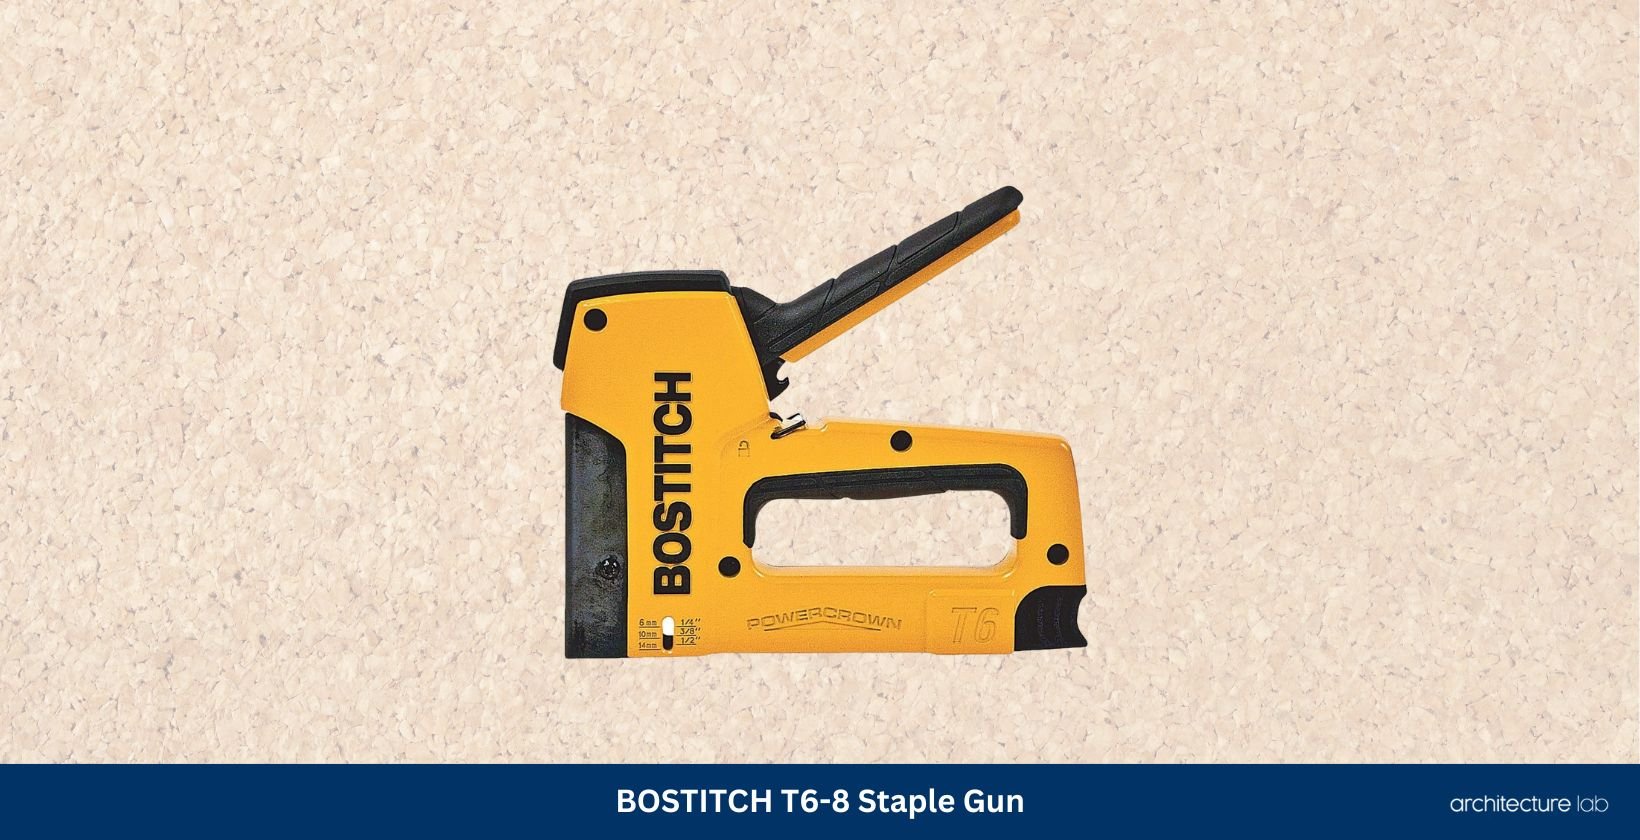 Bostitch t6 8 staple gun